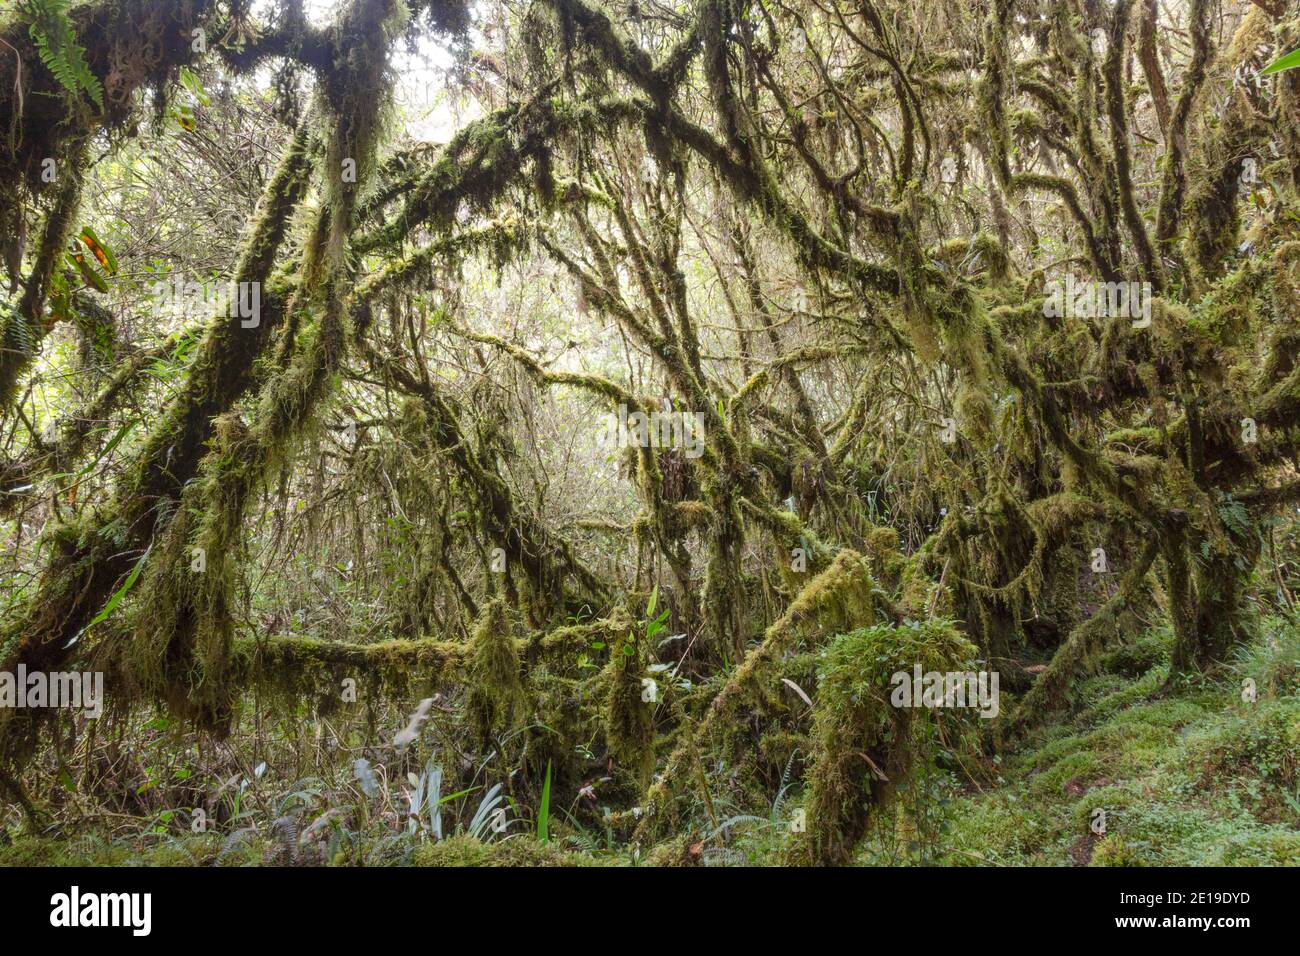 Elfin woodland or high altitude tropical dwarf forest at 4,500m altitude, near Papallacta, Ecuador. Stock Photo